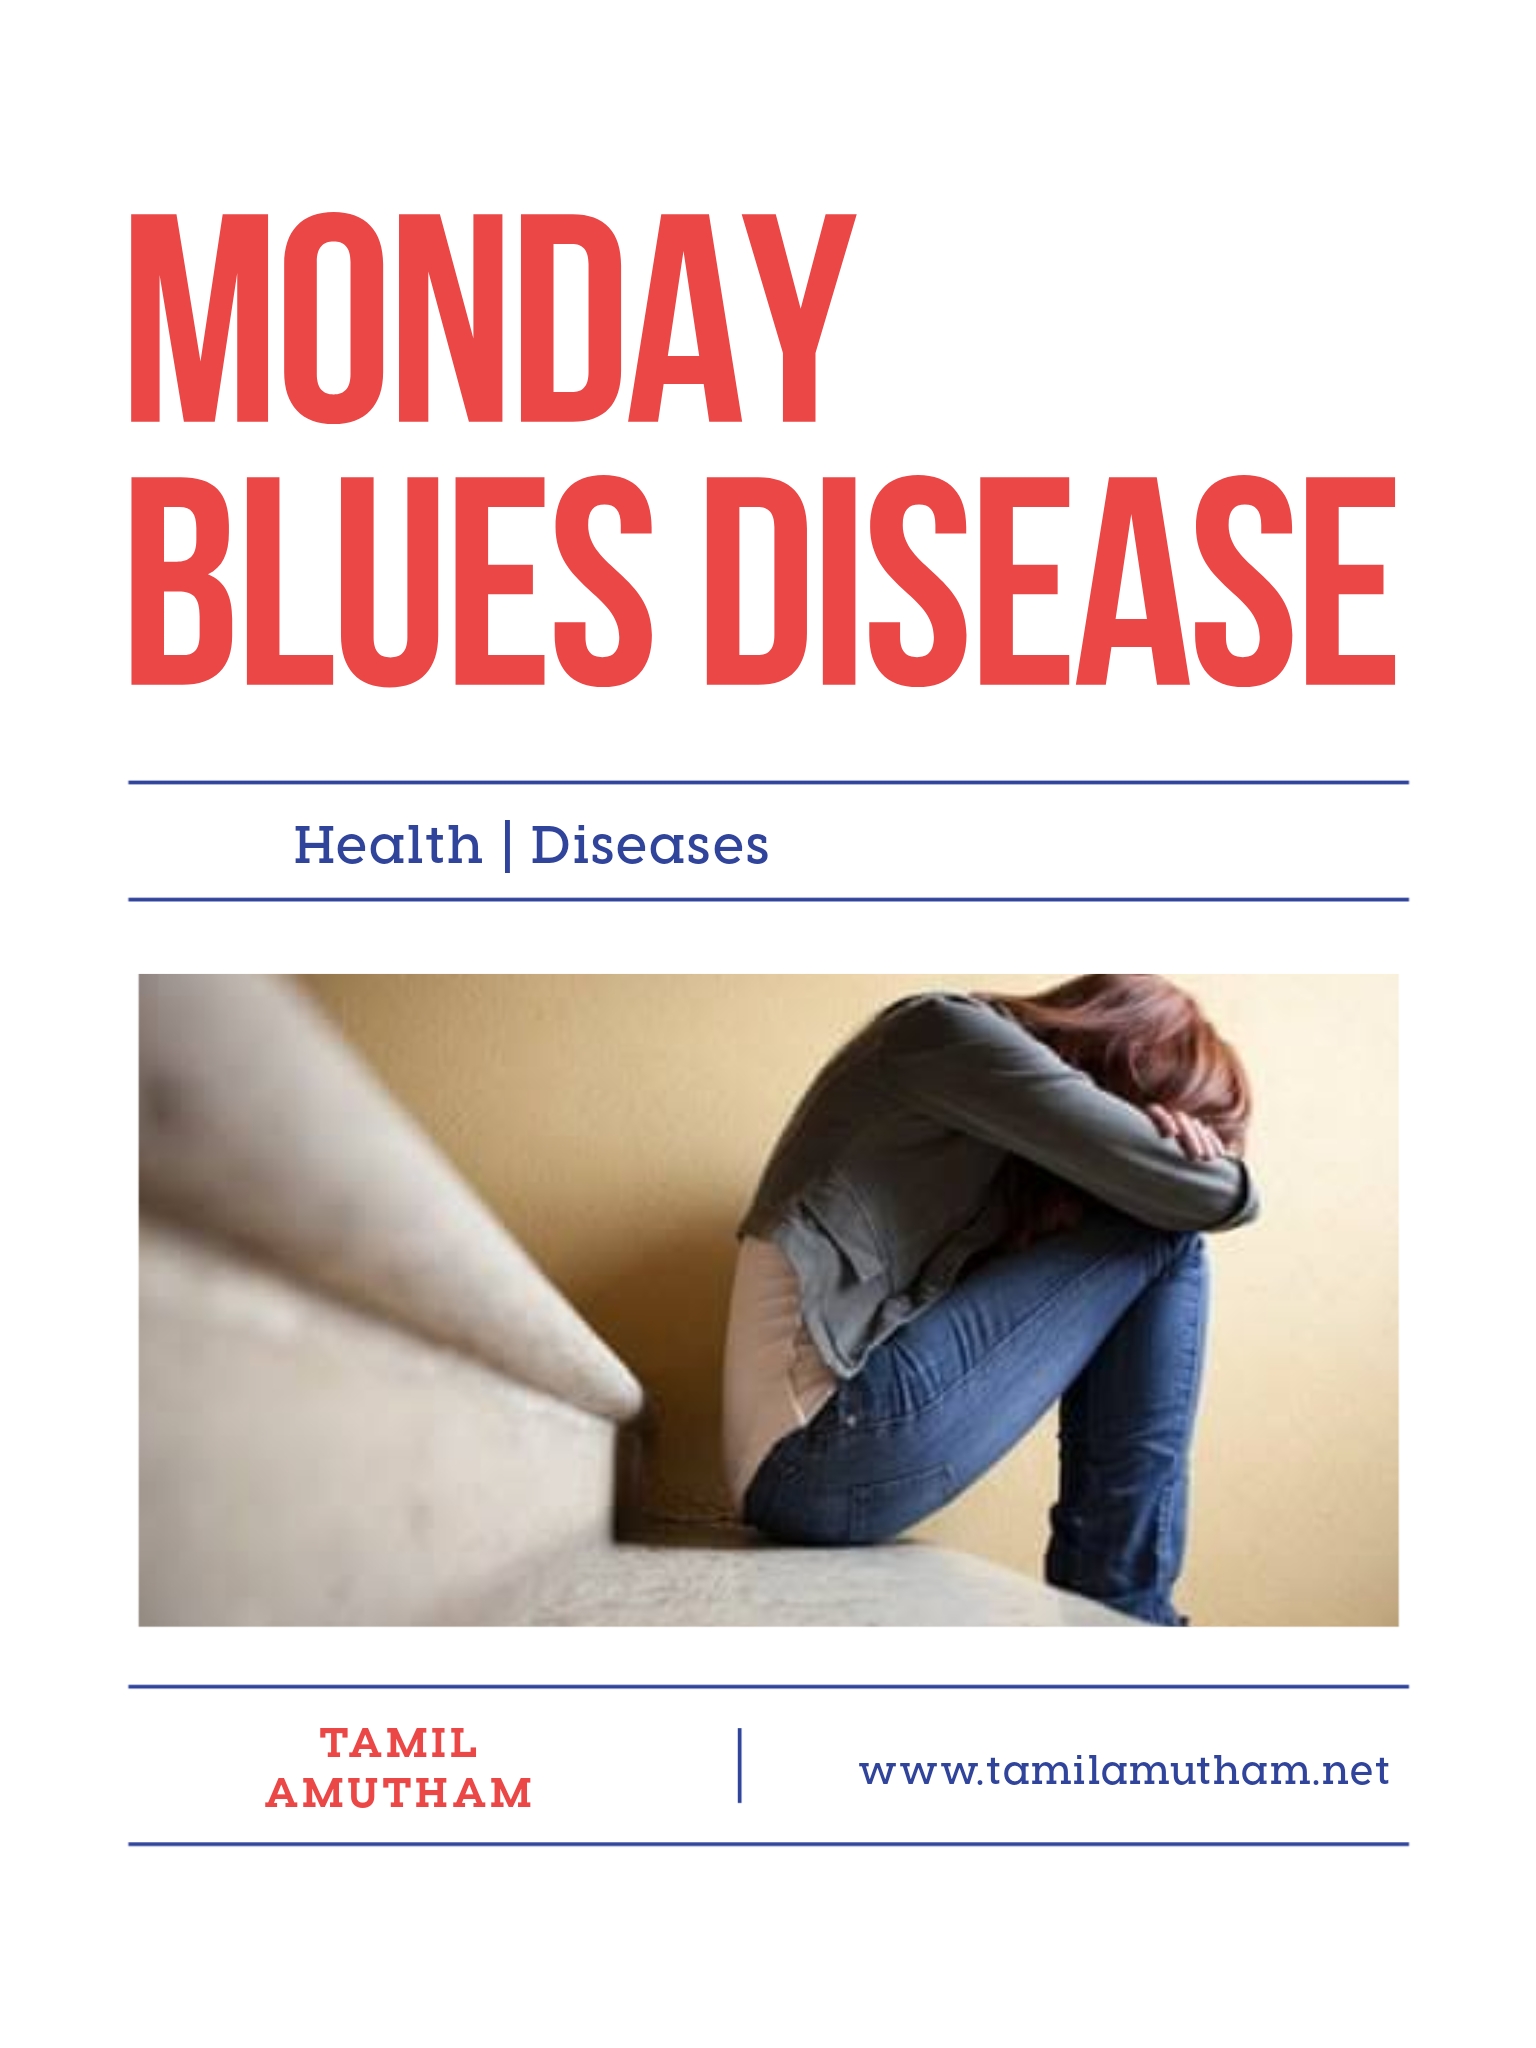 MONDAY BLUES DISEASE